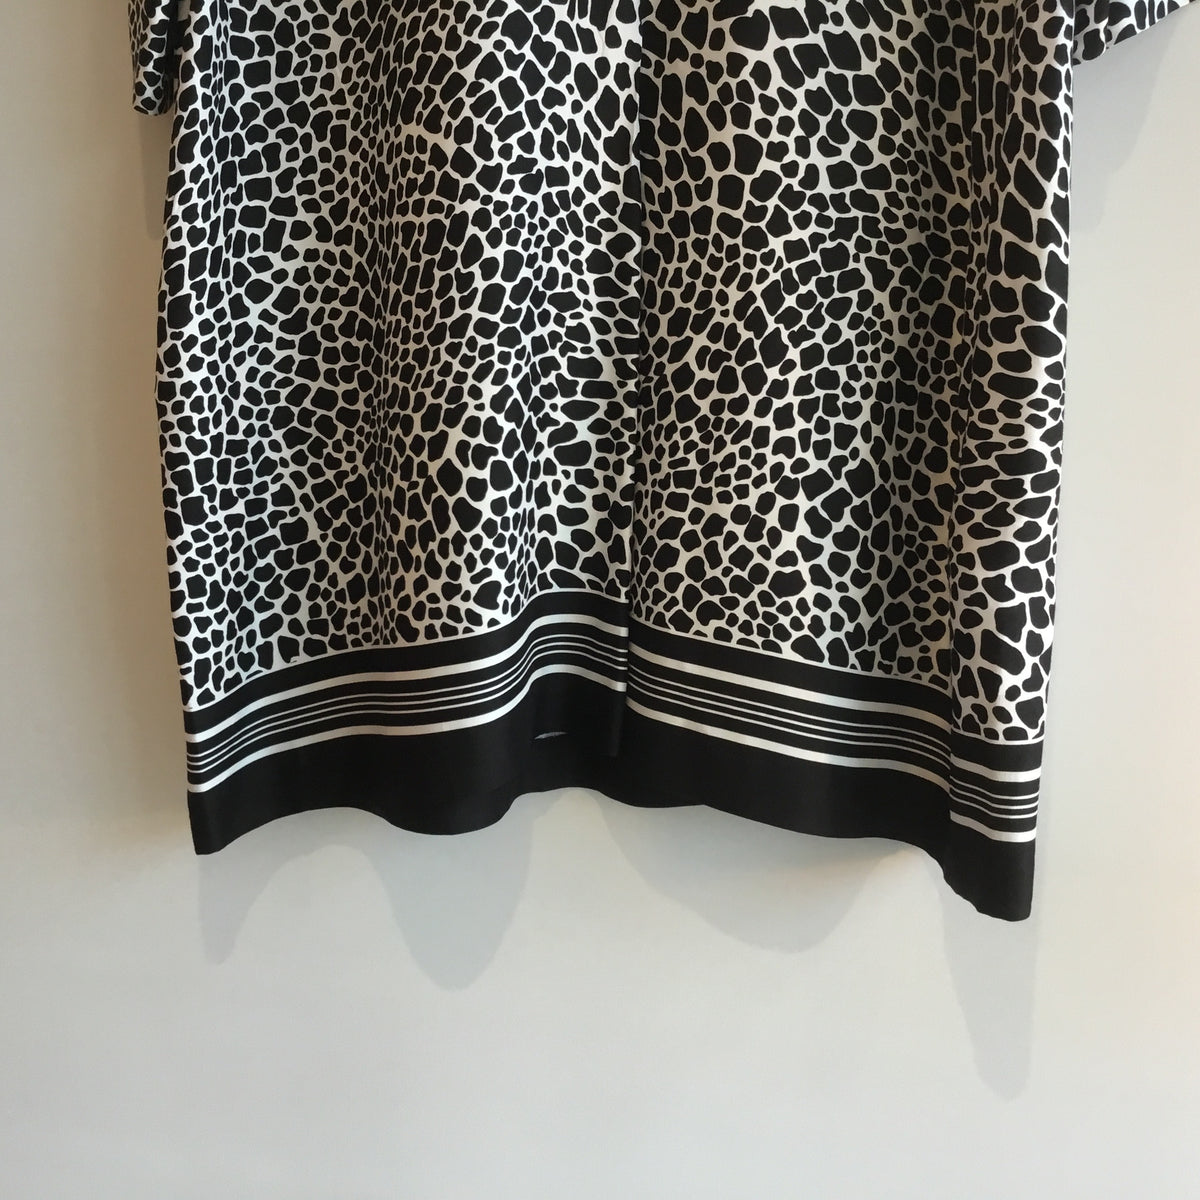 Hobbs animal print 'Marci' dress Blk/Ivory size 14